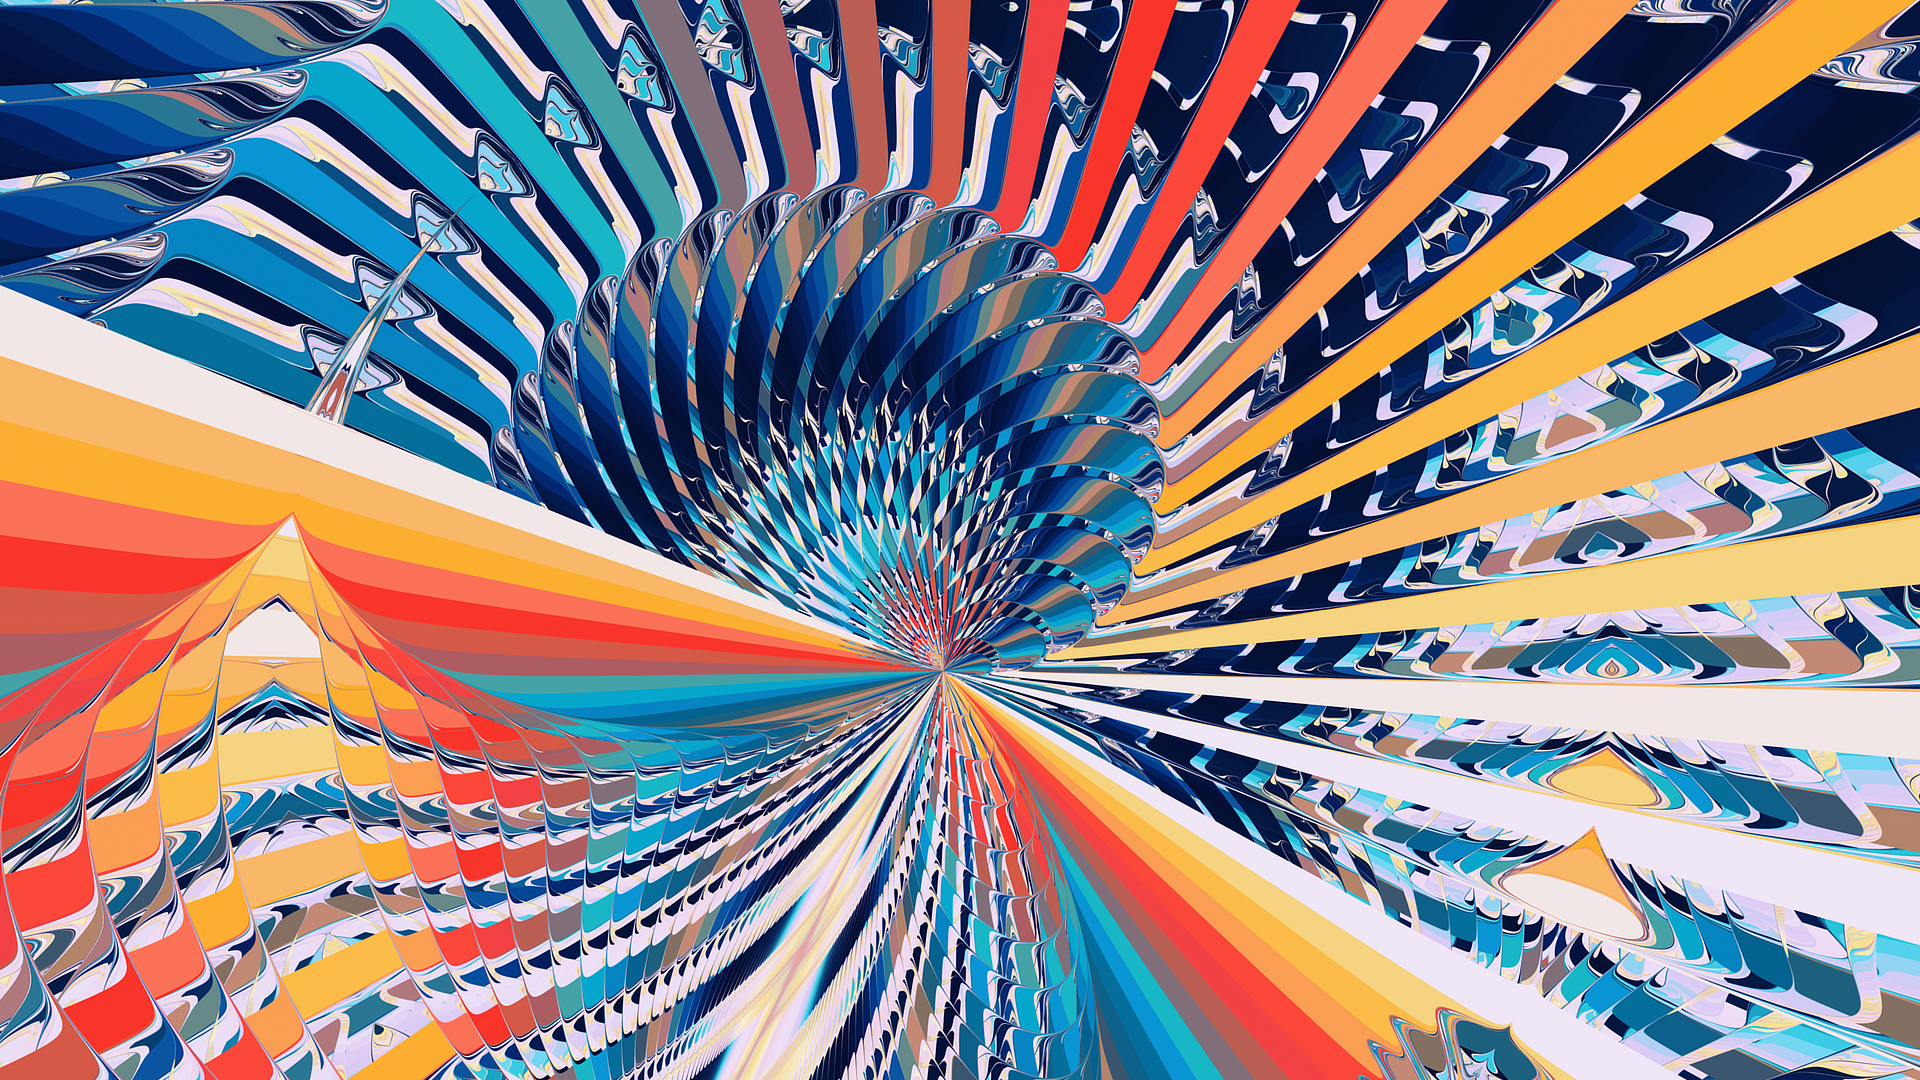 Colorful Digital Art Artwork Fractal Abstract Vortex 1920x1080